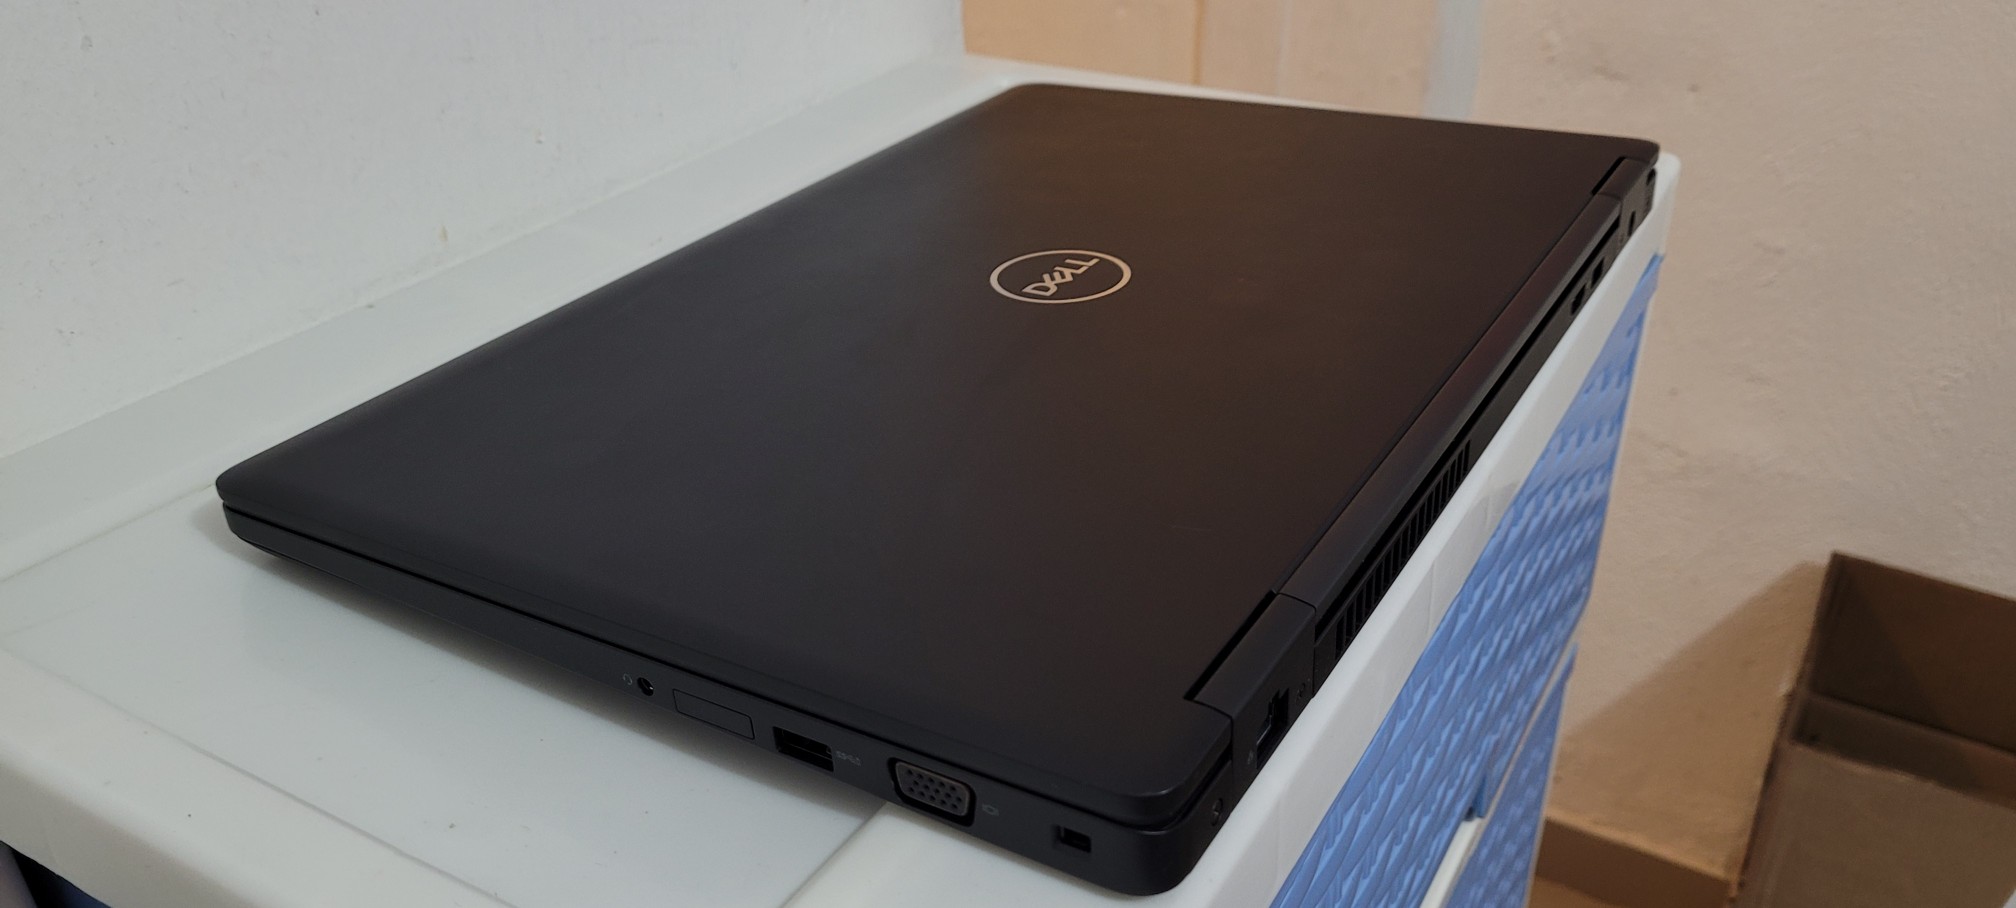 computadoras y laptops - Nueva Dell 5570 17 Pulg Core i7 6ta Ram 16gb SSD 512GB Aty Radeon R7 M370 2gb 2